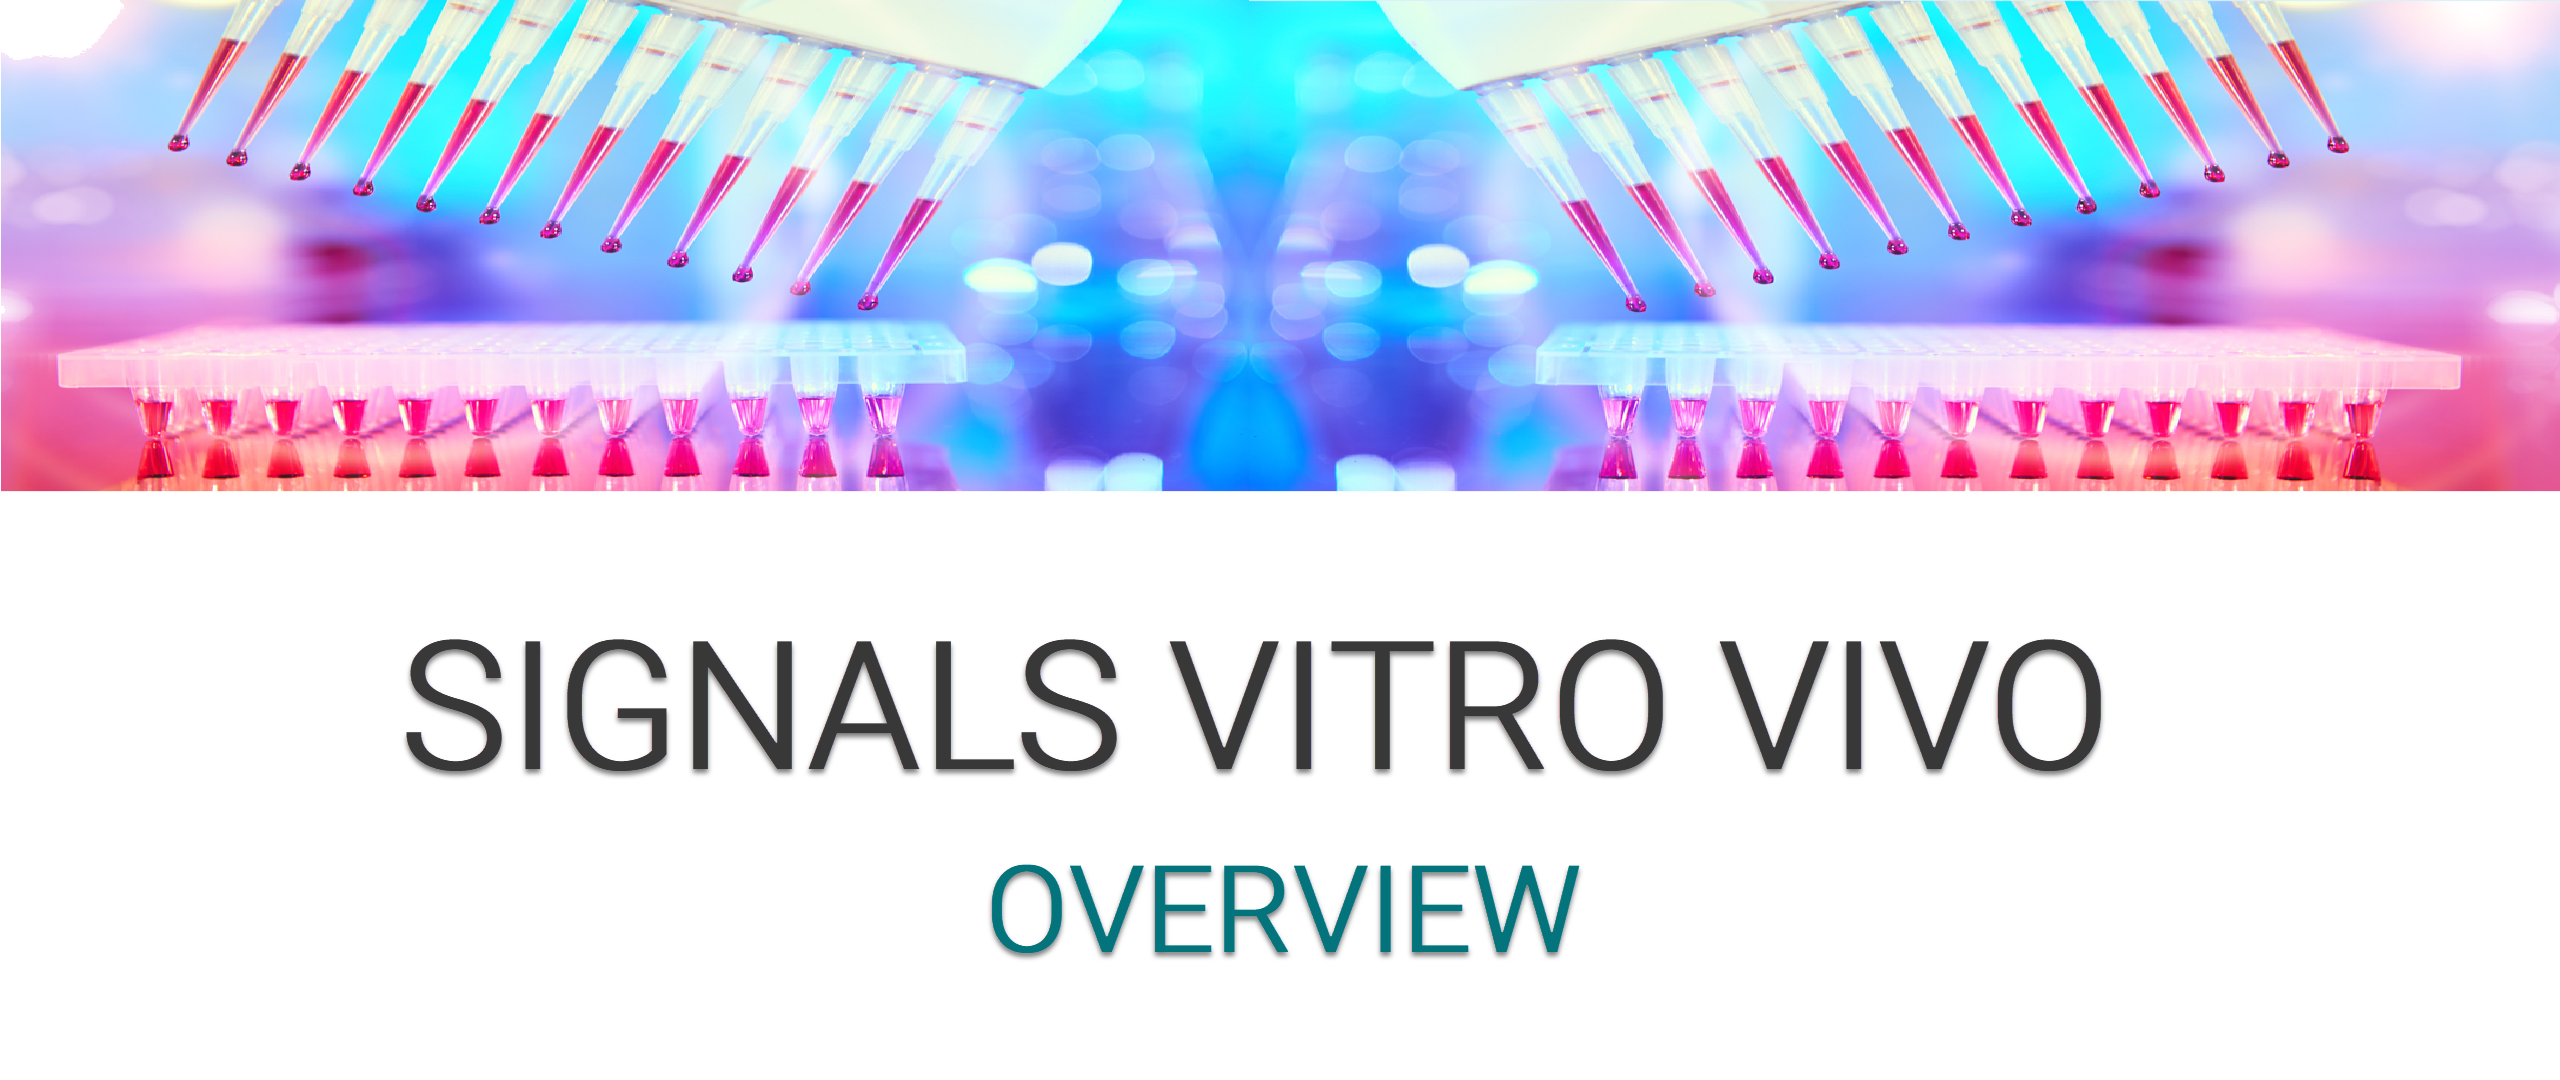 Watch Signals VitroVivo Quick Introduction | PerkinElmer Informatics on YouTube.